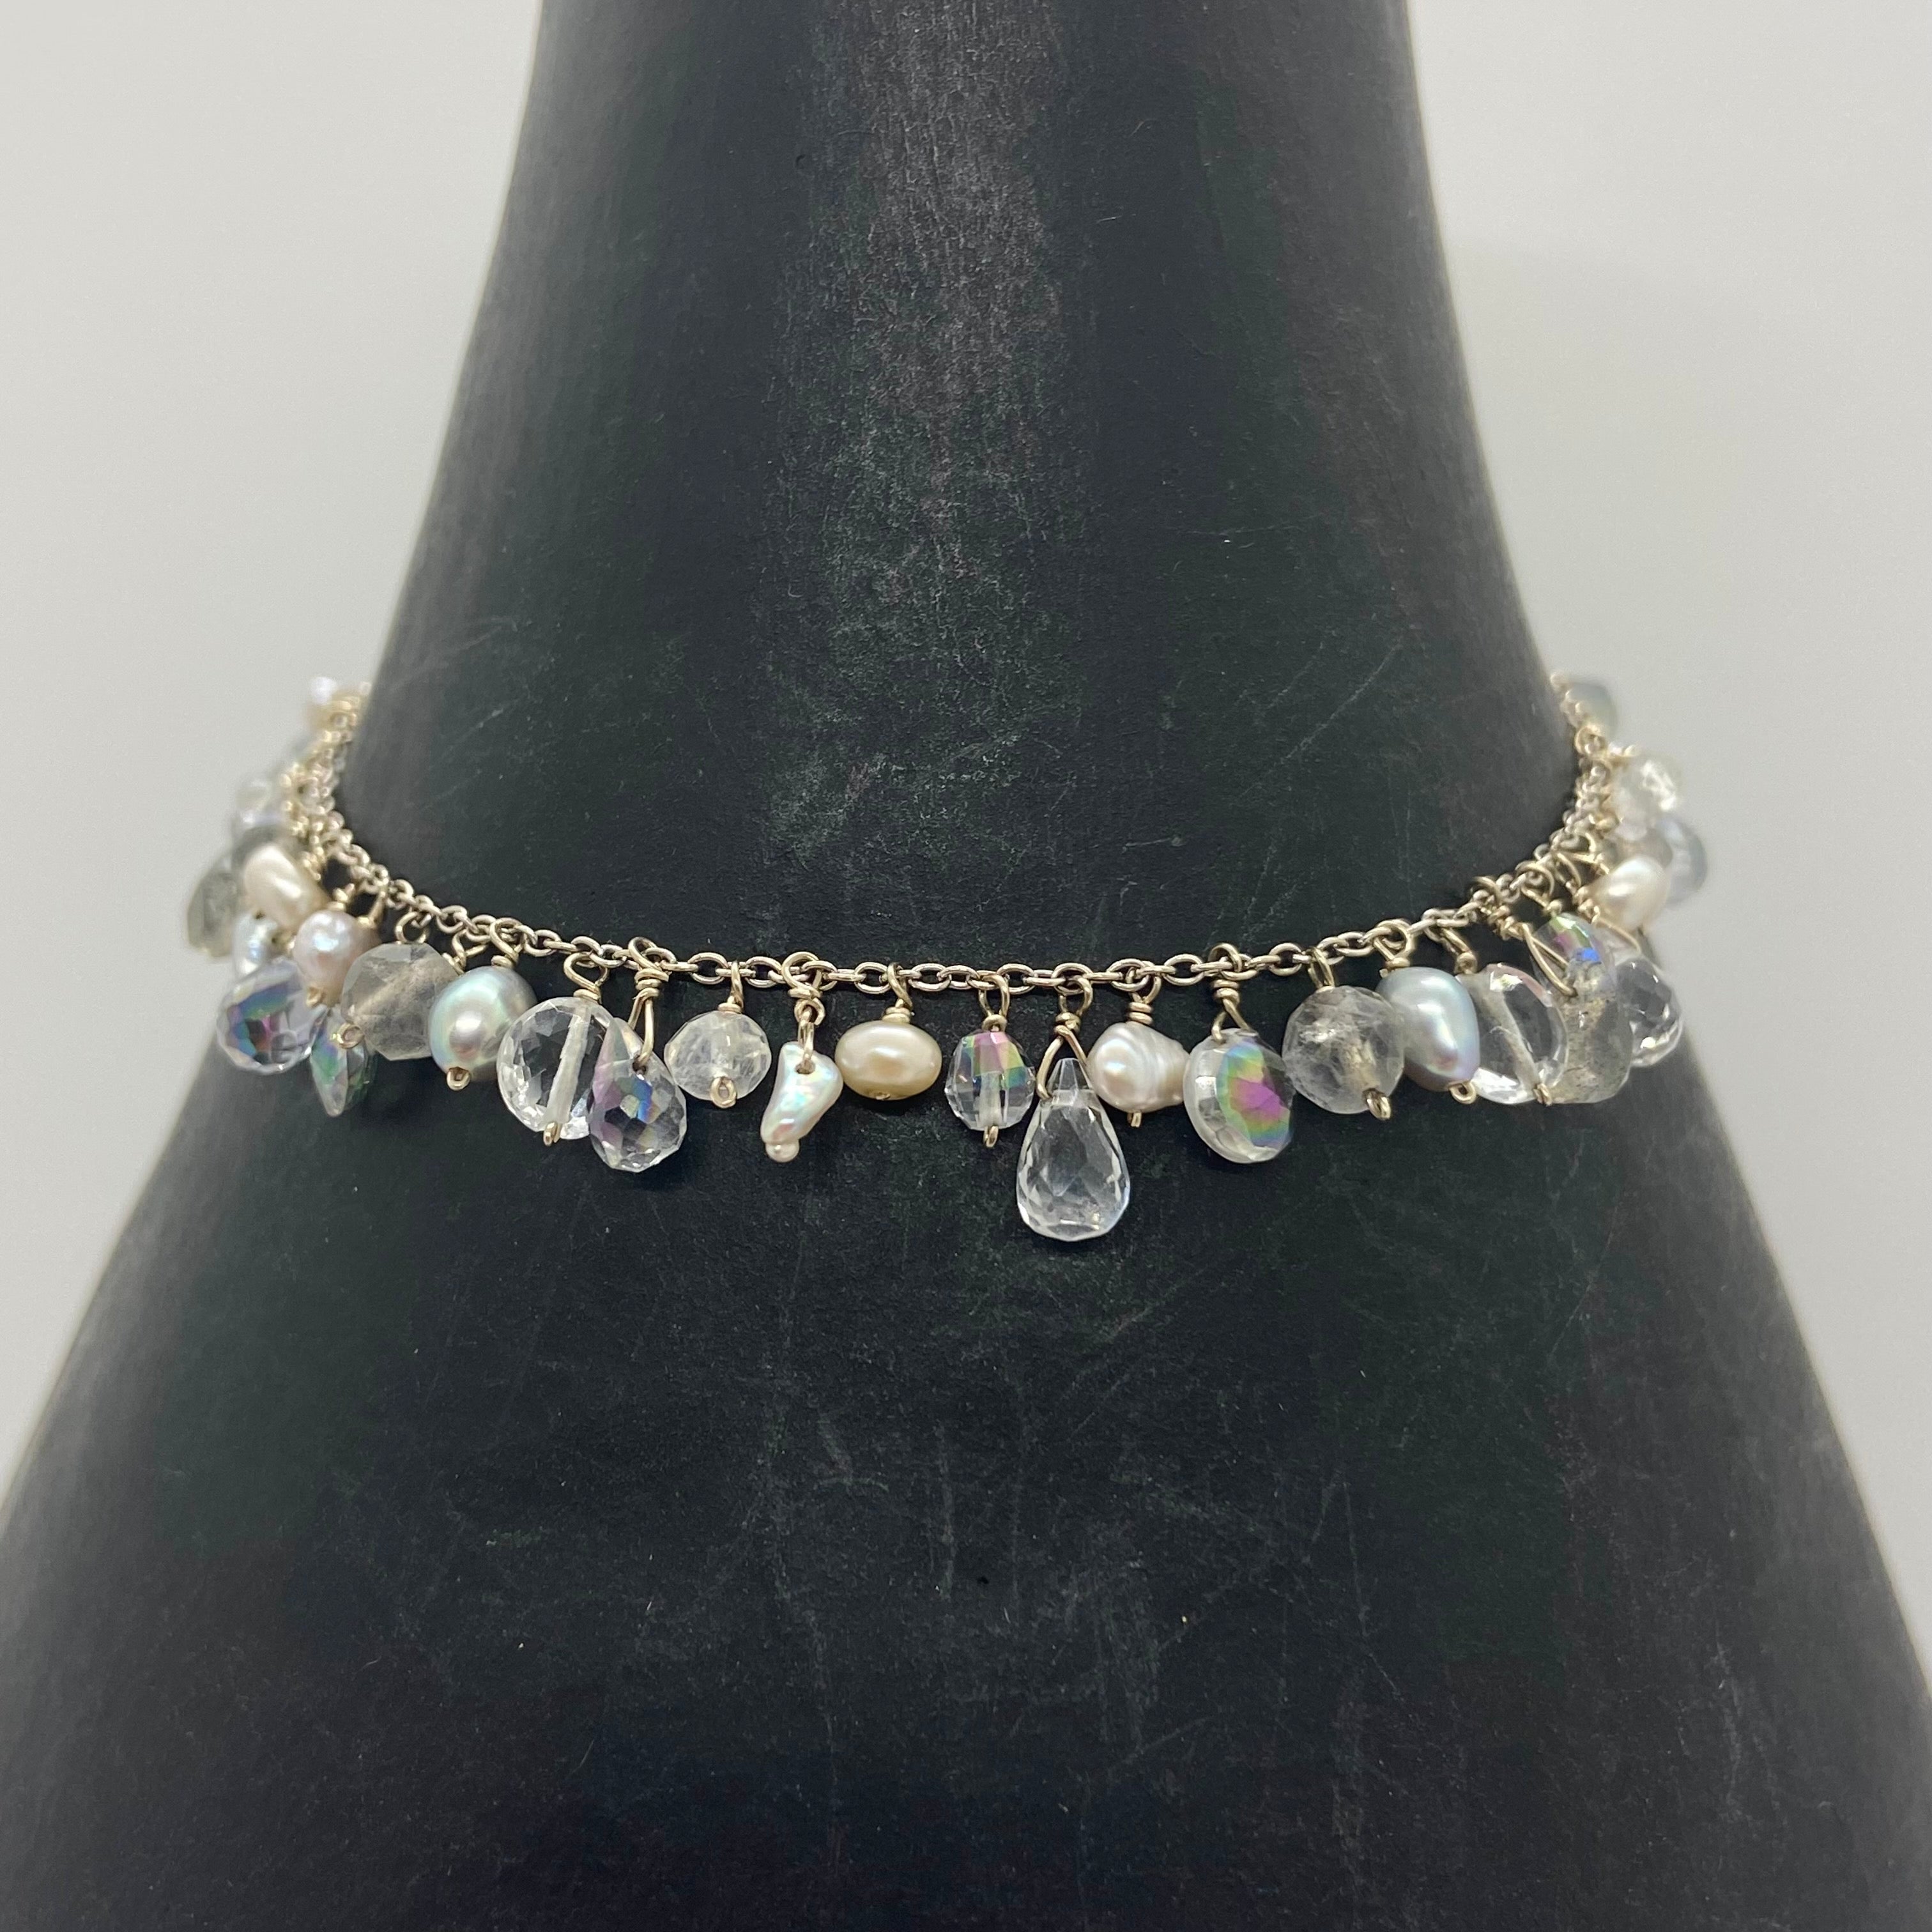 14k White Gold Bracelet w/ Labradorite, Moonstone, Freshwater Pearls, Quartz & Mystic Topaz